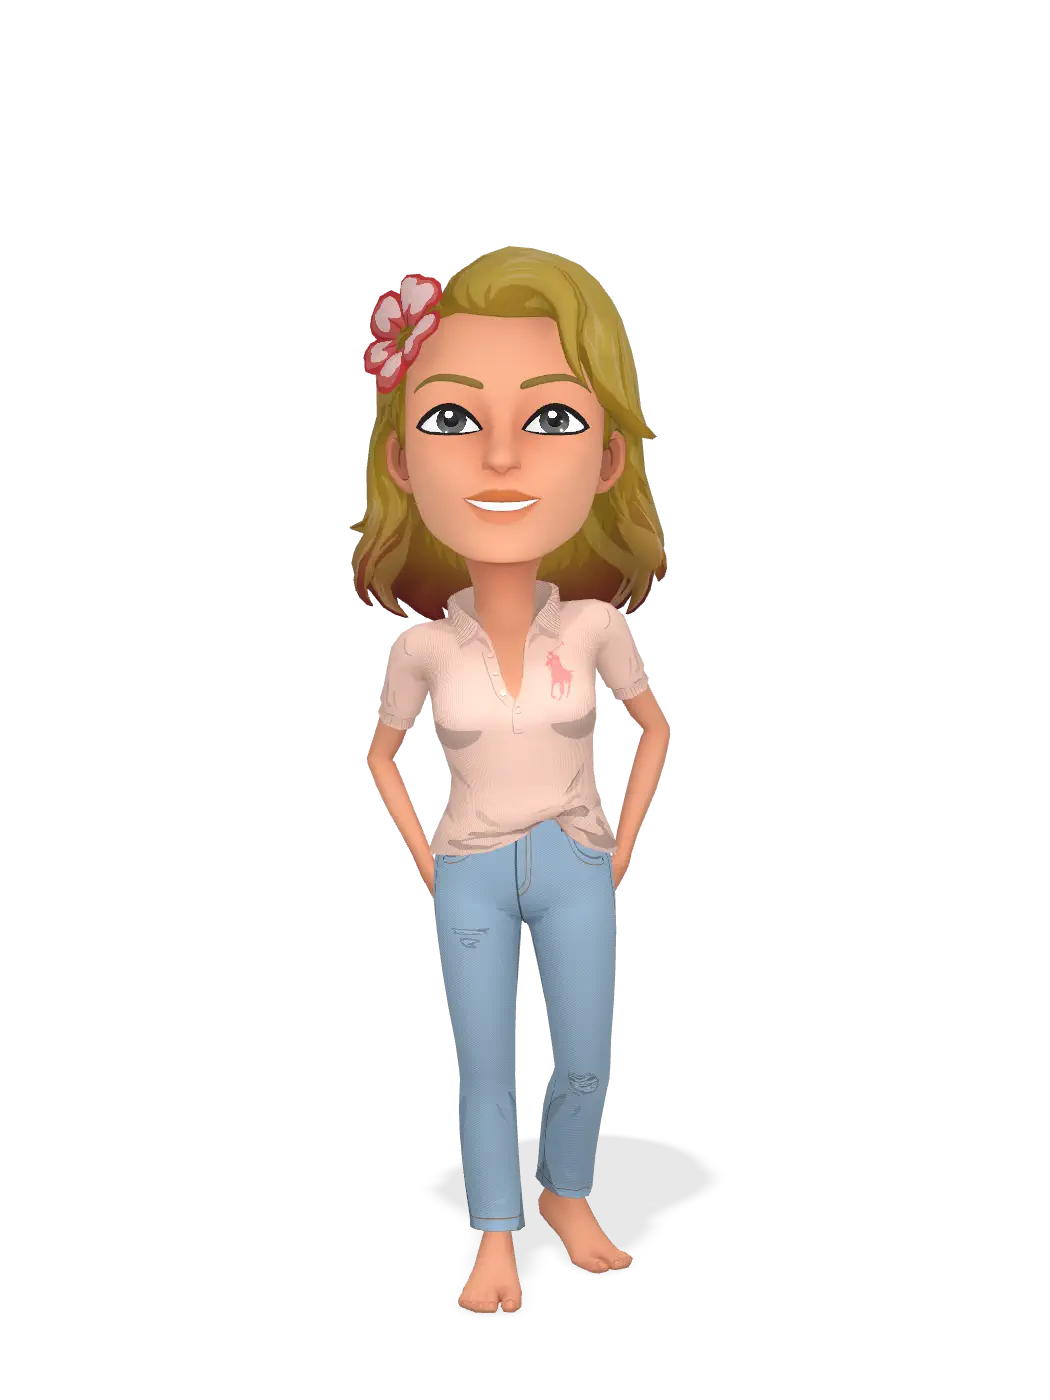 3D Bitmoji for alinevalois20 avatar